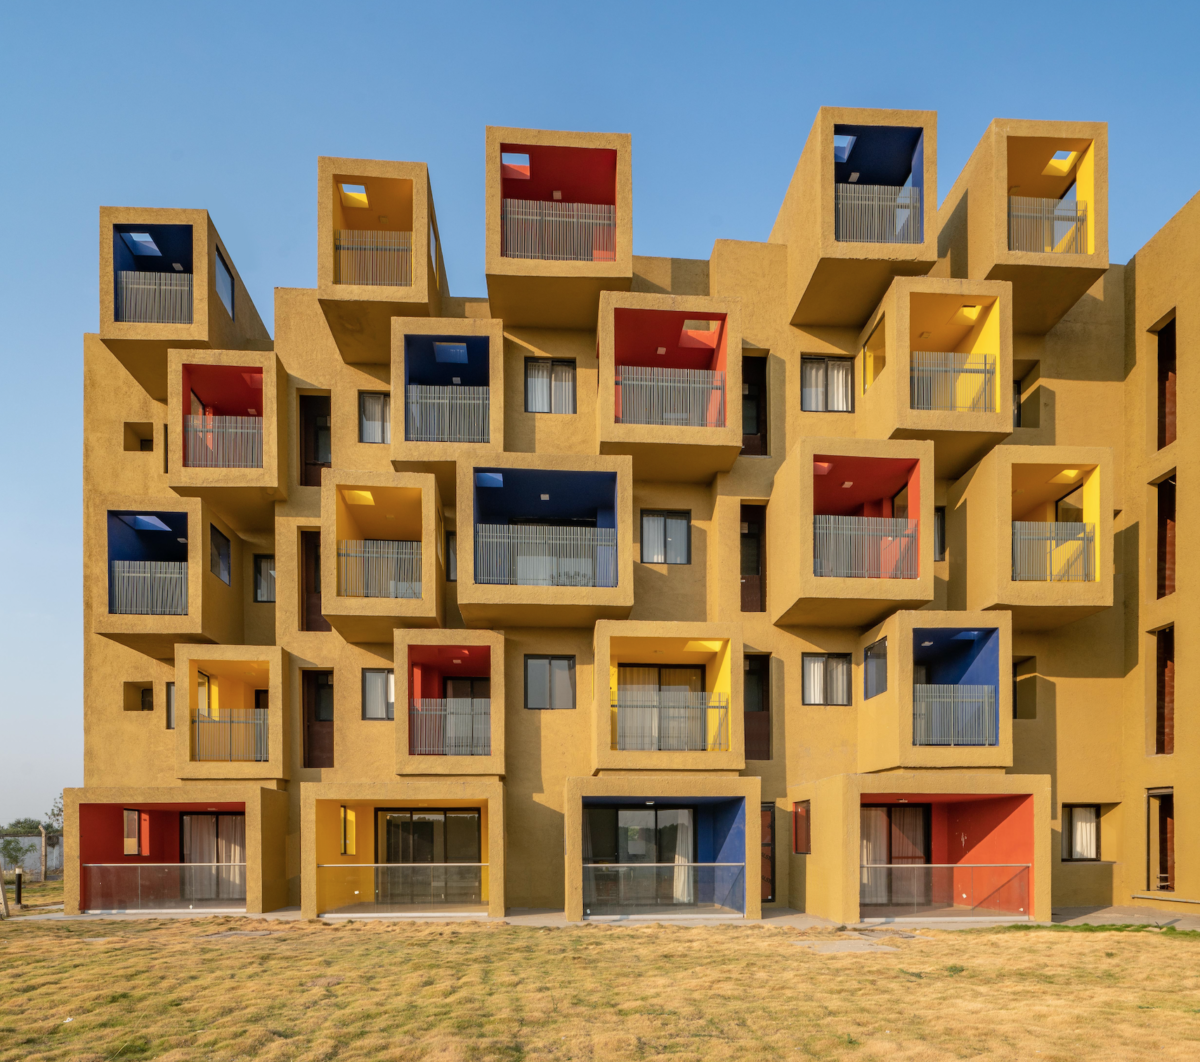 colour, housing blocks, cubic architecture, india, sanjay puri architects, india architecture, iconeye, ICON magazine